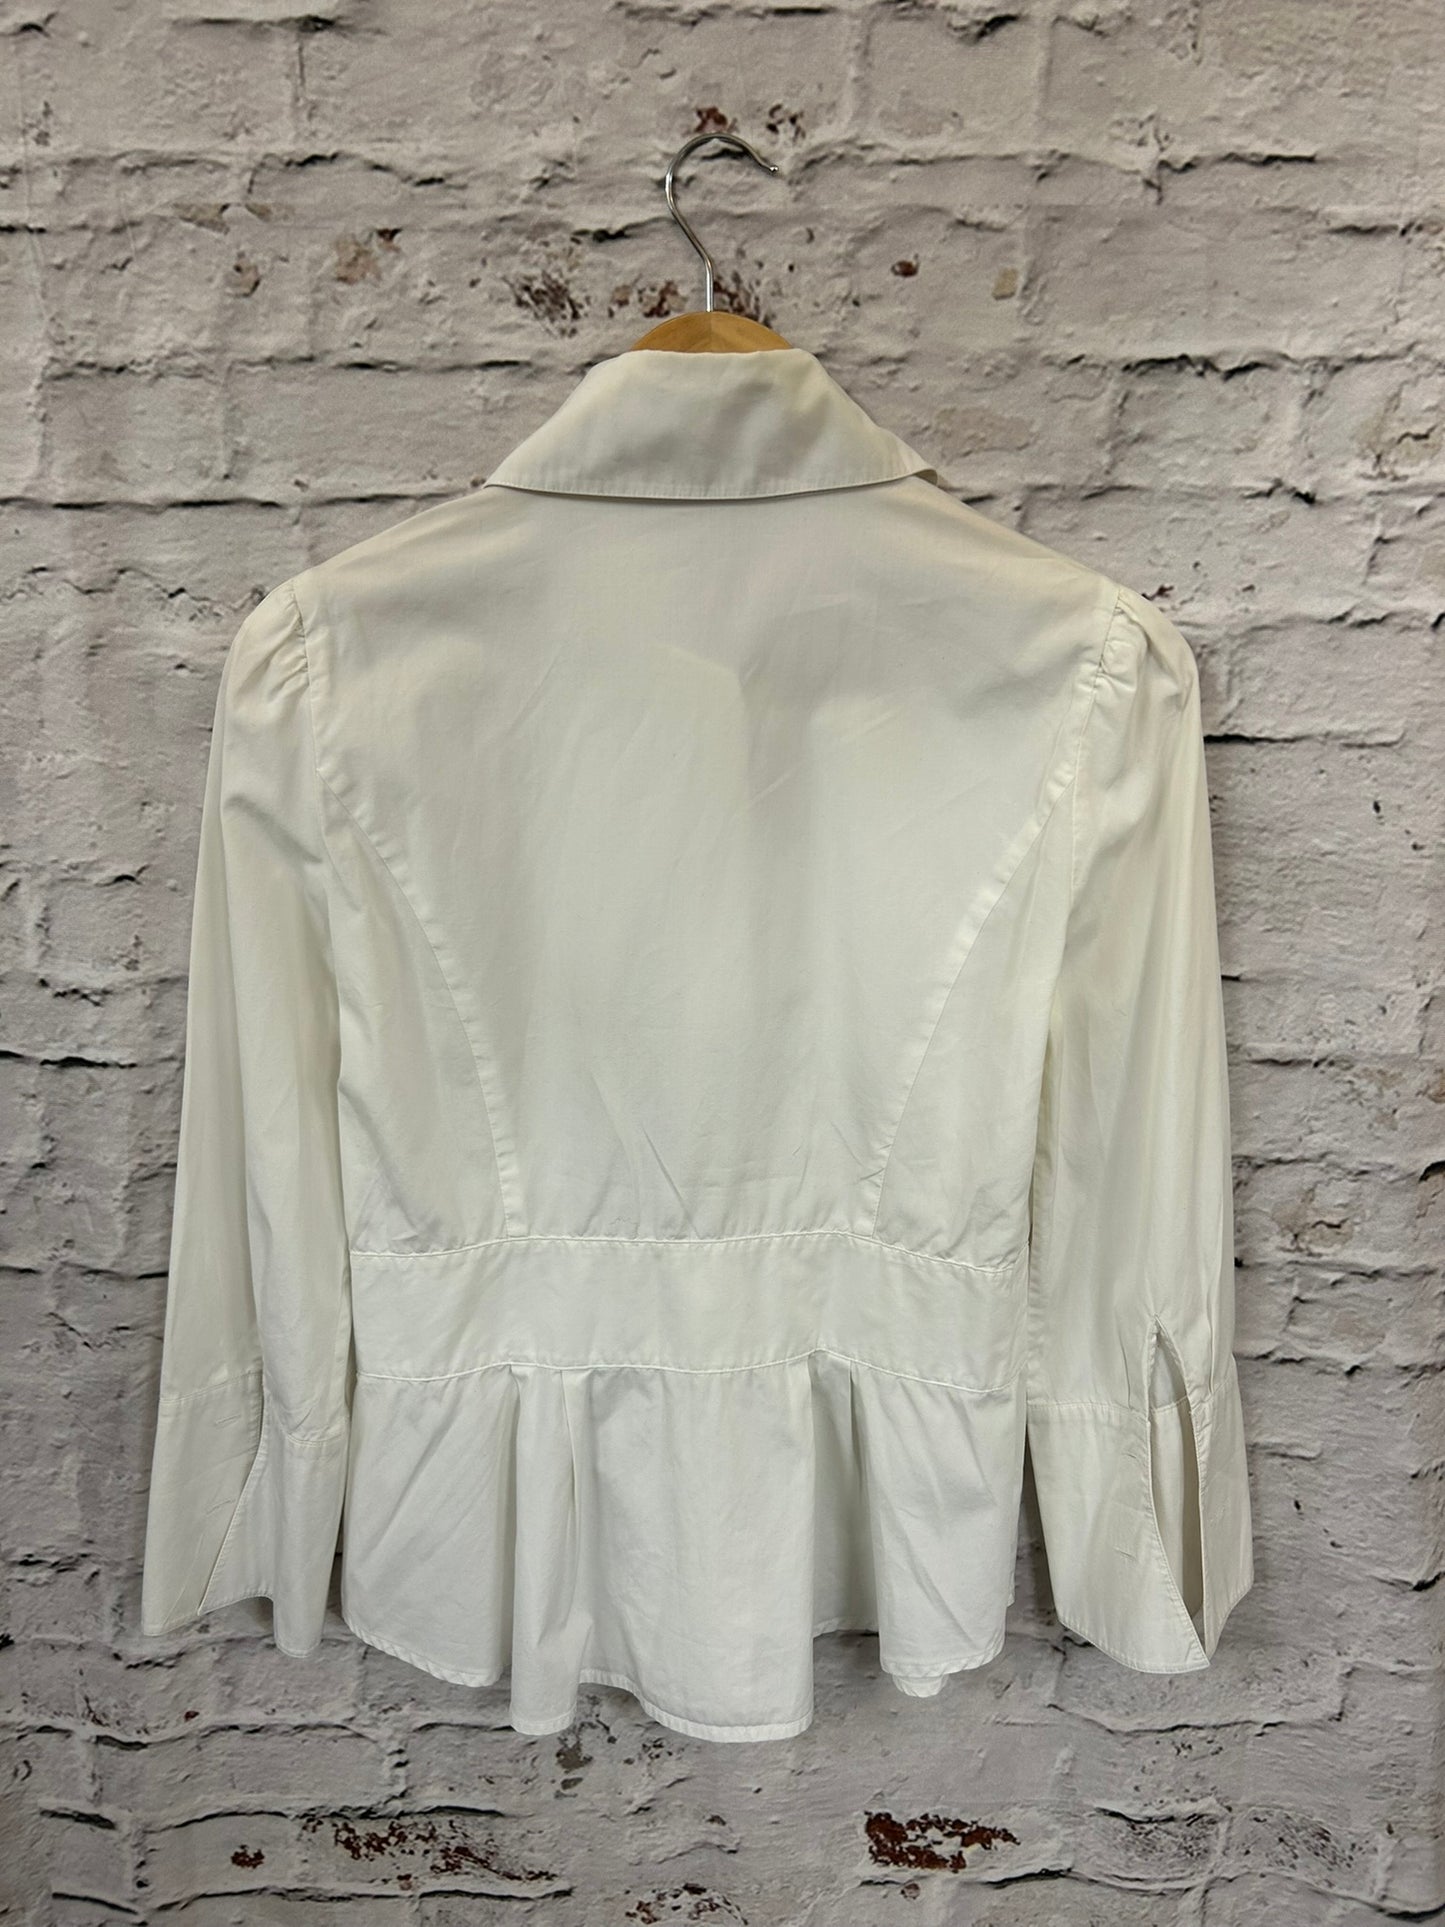 Designer 1990s Style White Shirt Size 10-12